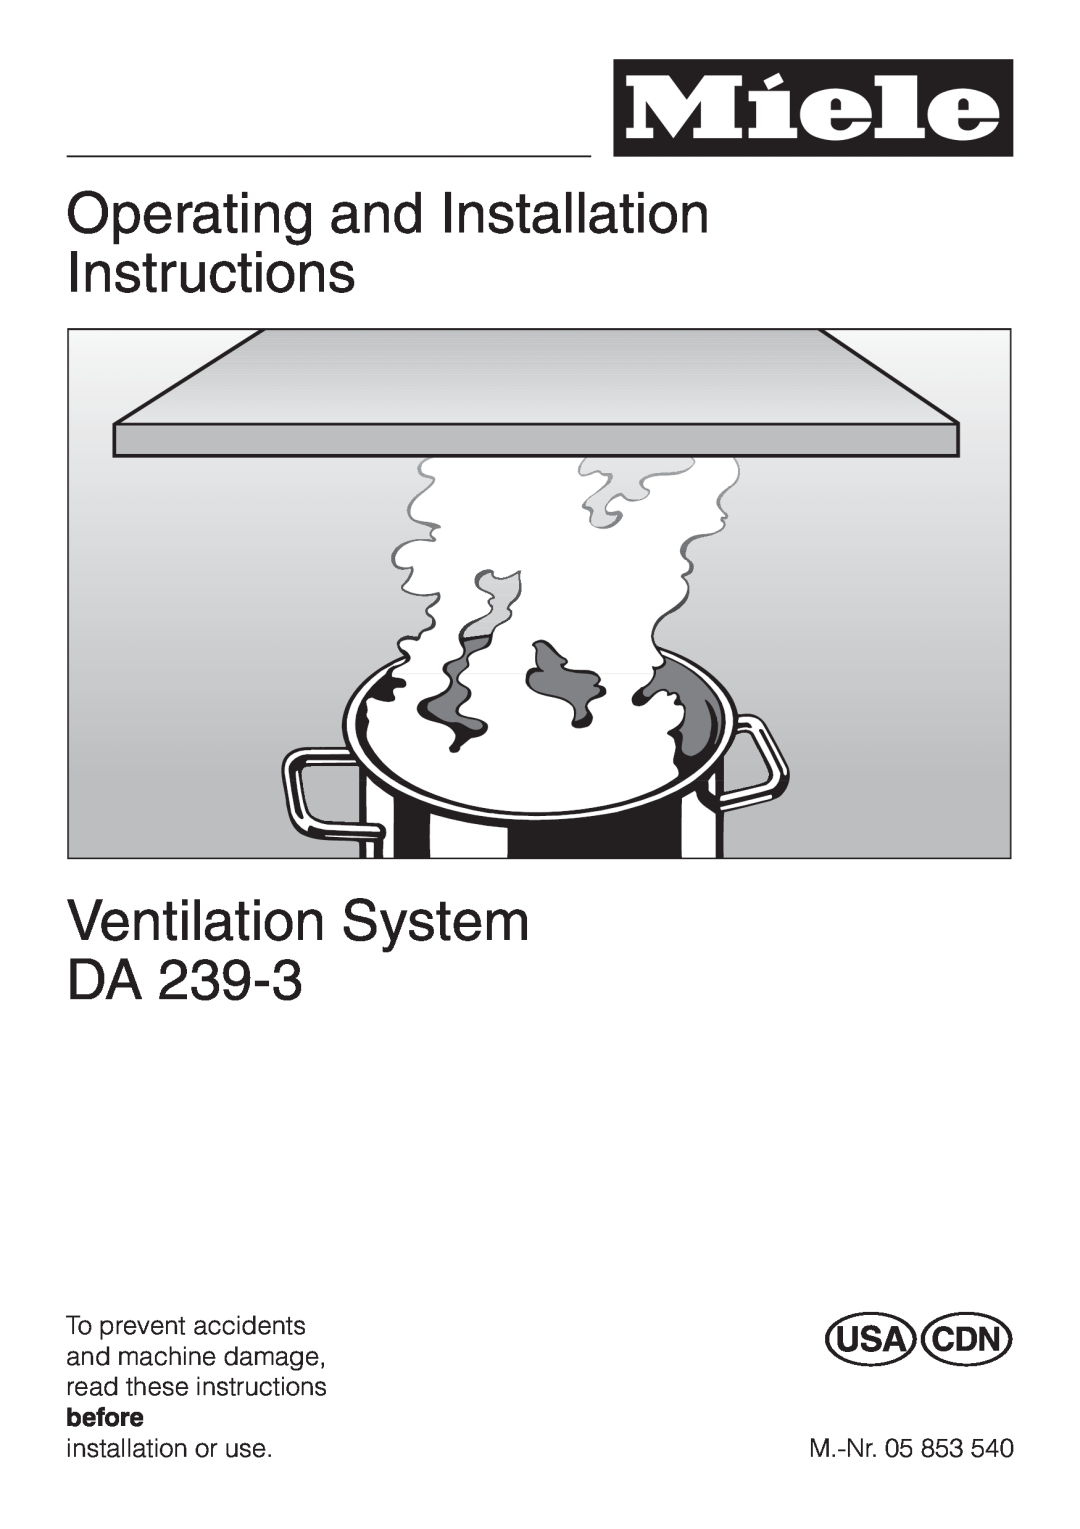 Miele DA239-3 installation instructions Operating and Installation Instructions, Ventilation System DA 